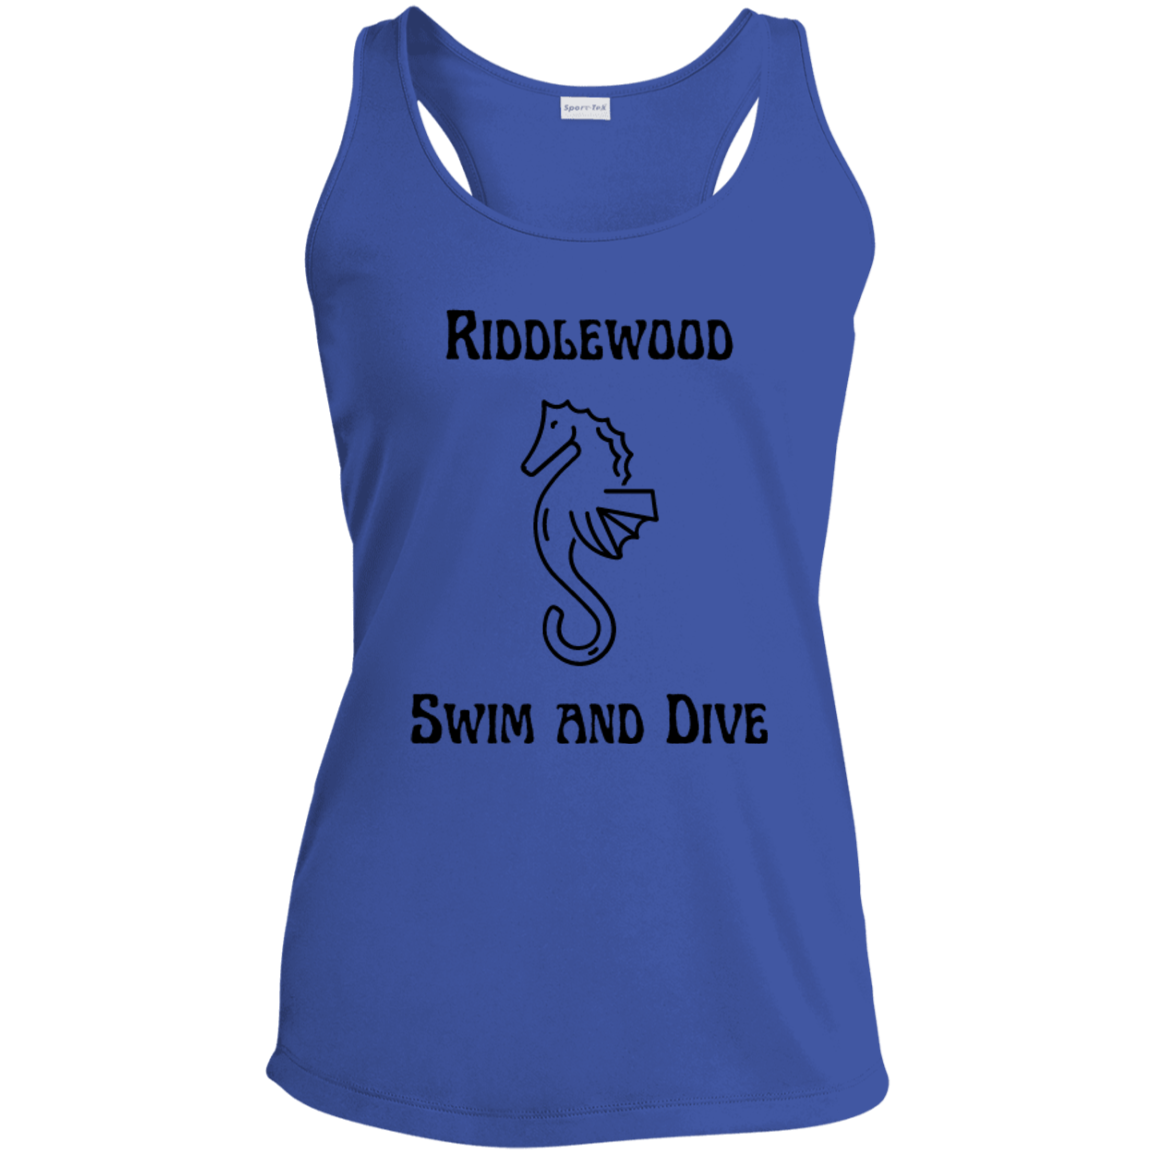 Riddlewood swim and dive TeamStore Ladies' Performance Racerback Tank